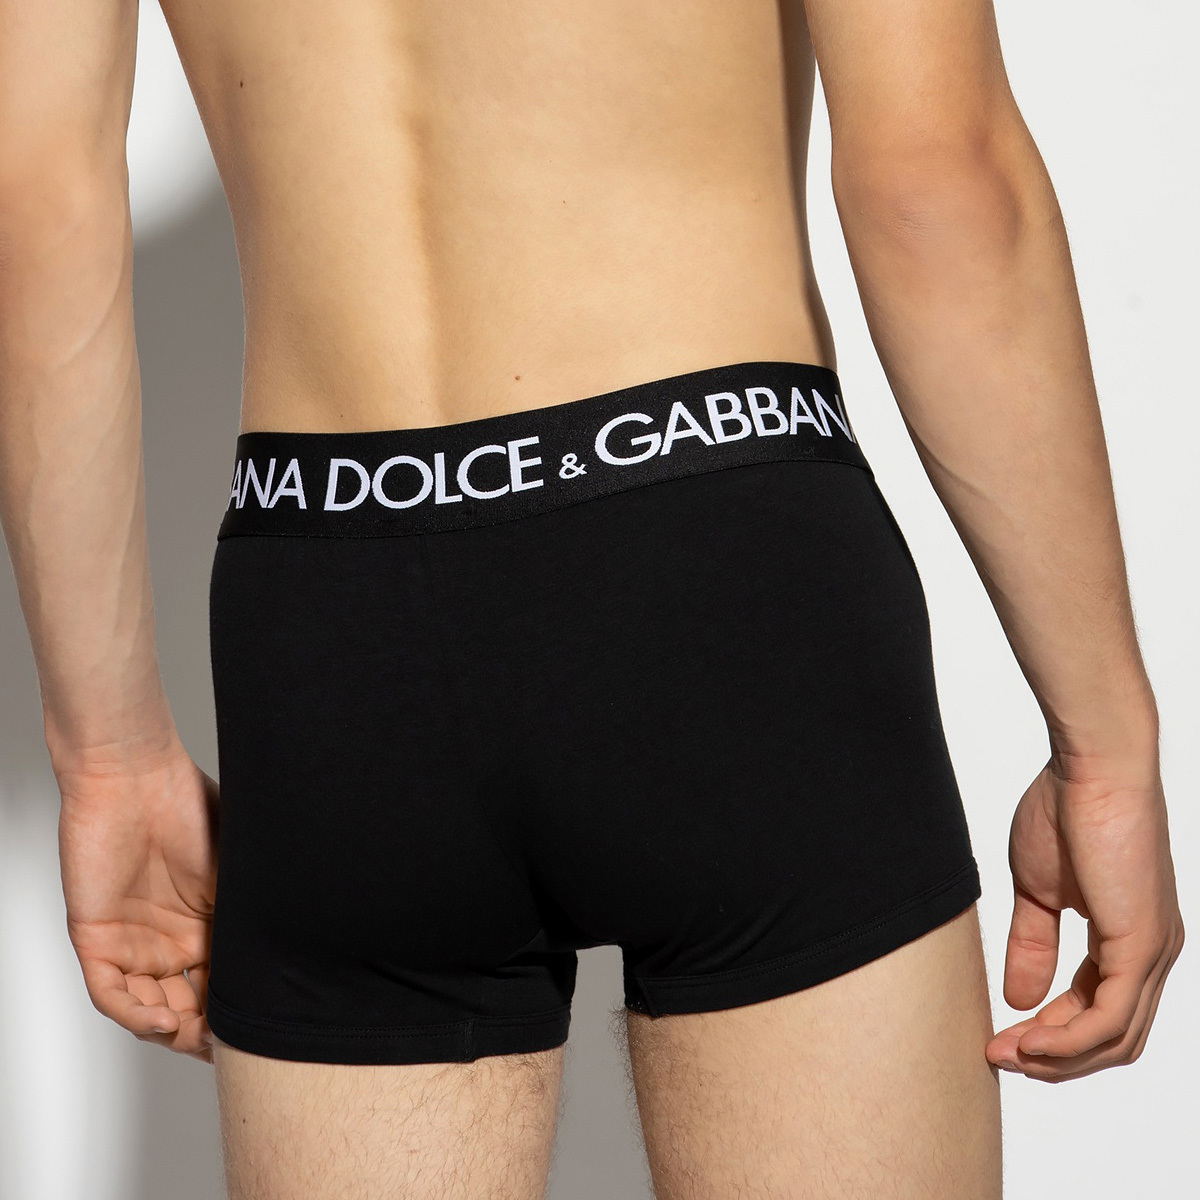  free shipping 3 DOLCE&GABBANA Dolce & Gabbana M9D70J ONN97 N0000 under wear boxer shorts 2 pieces set size 3